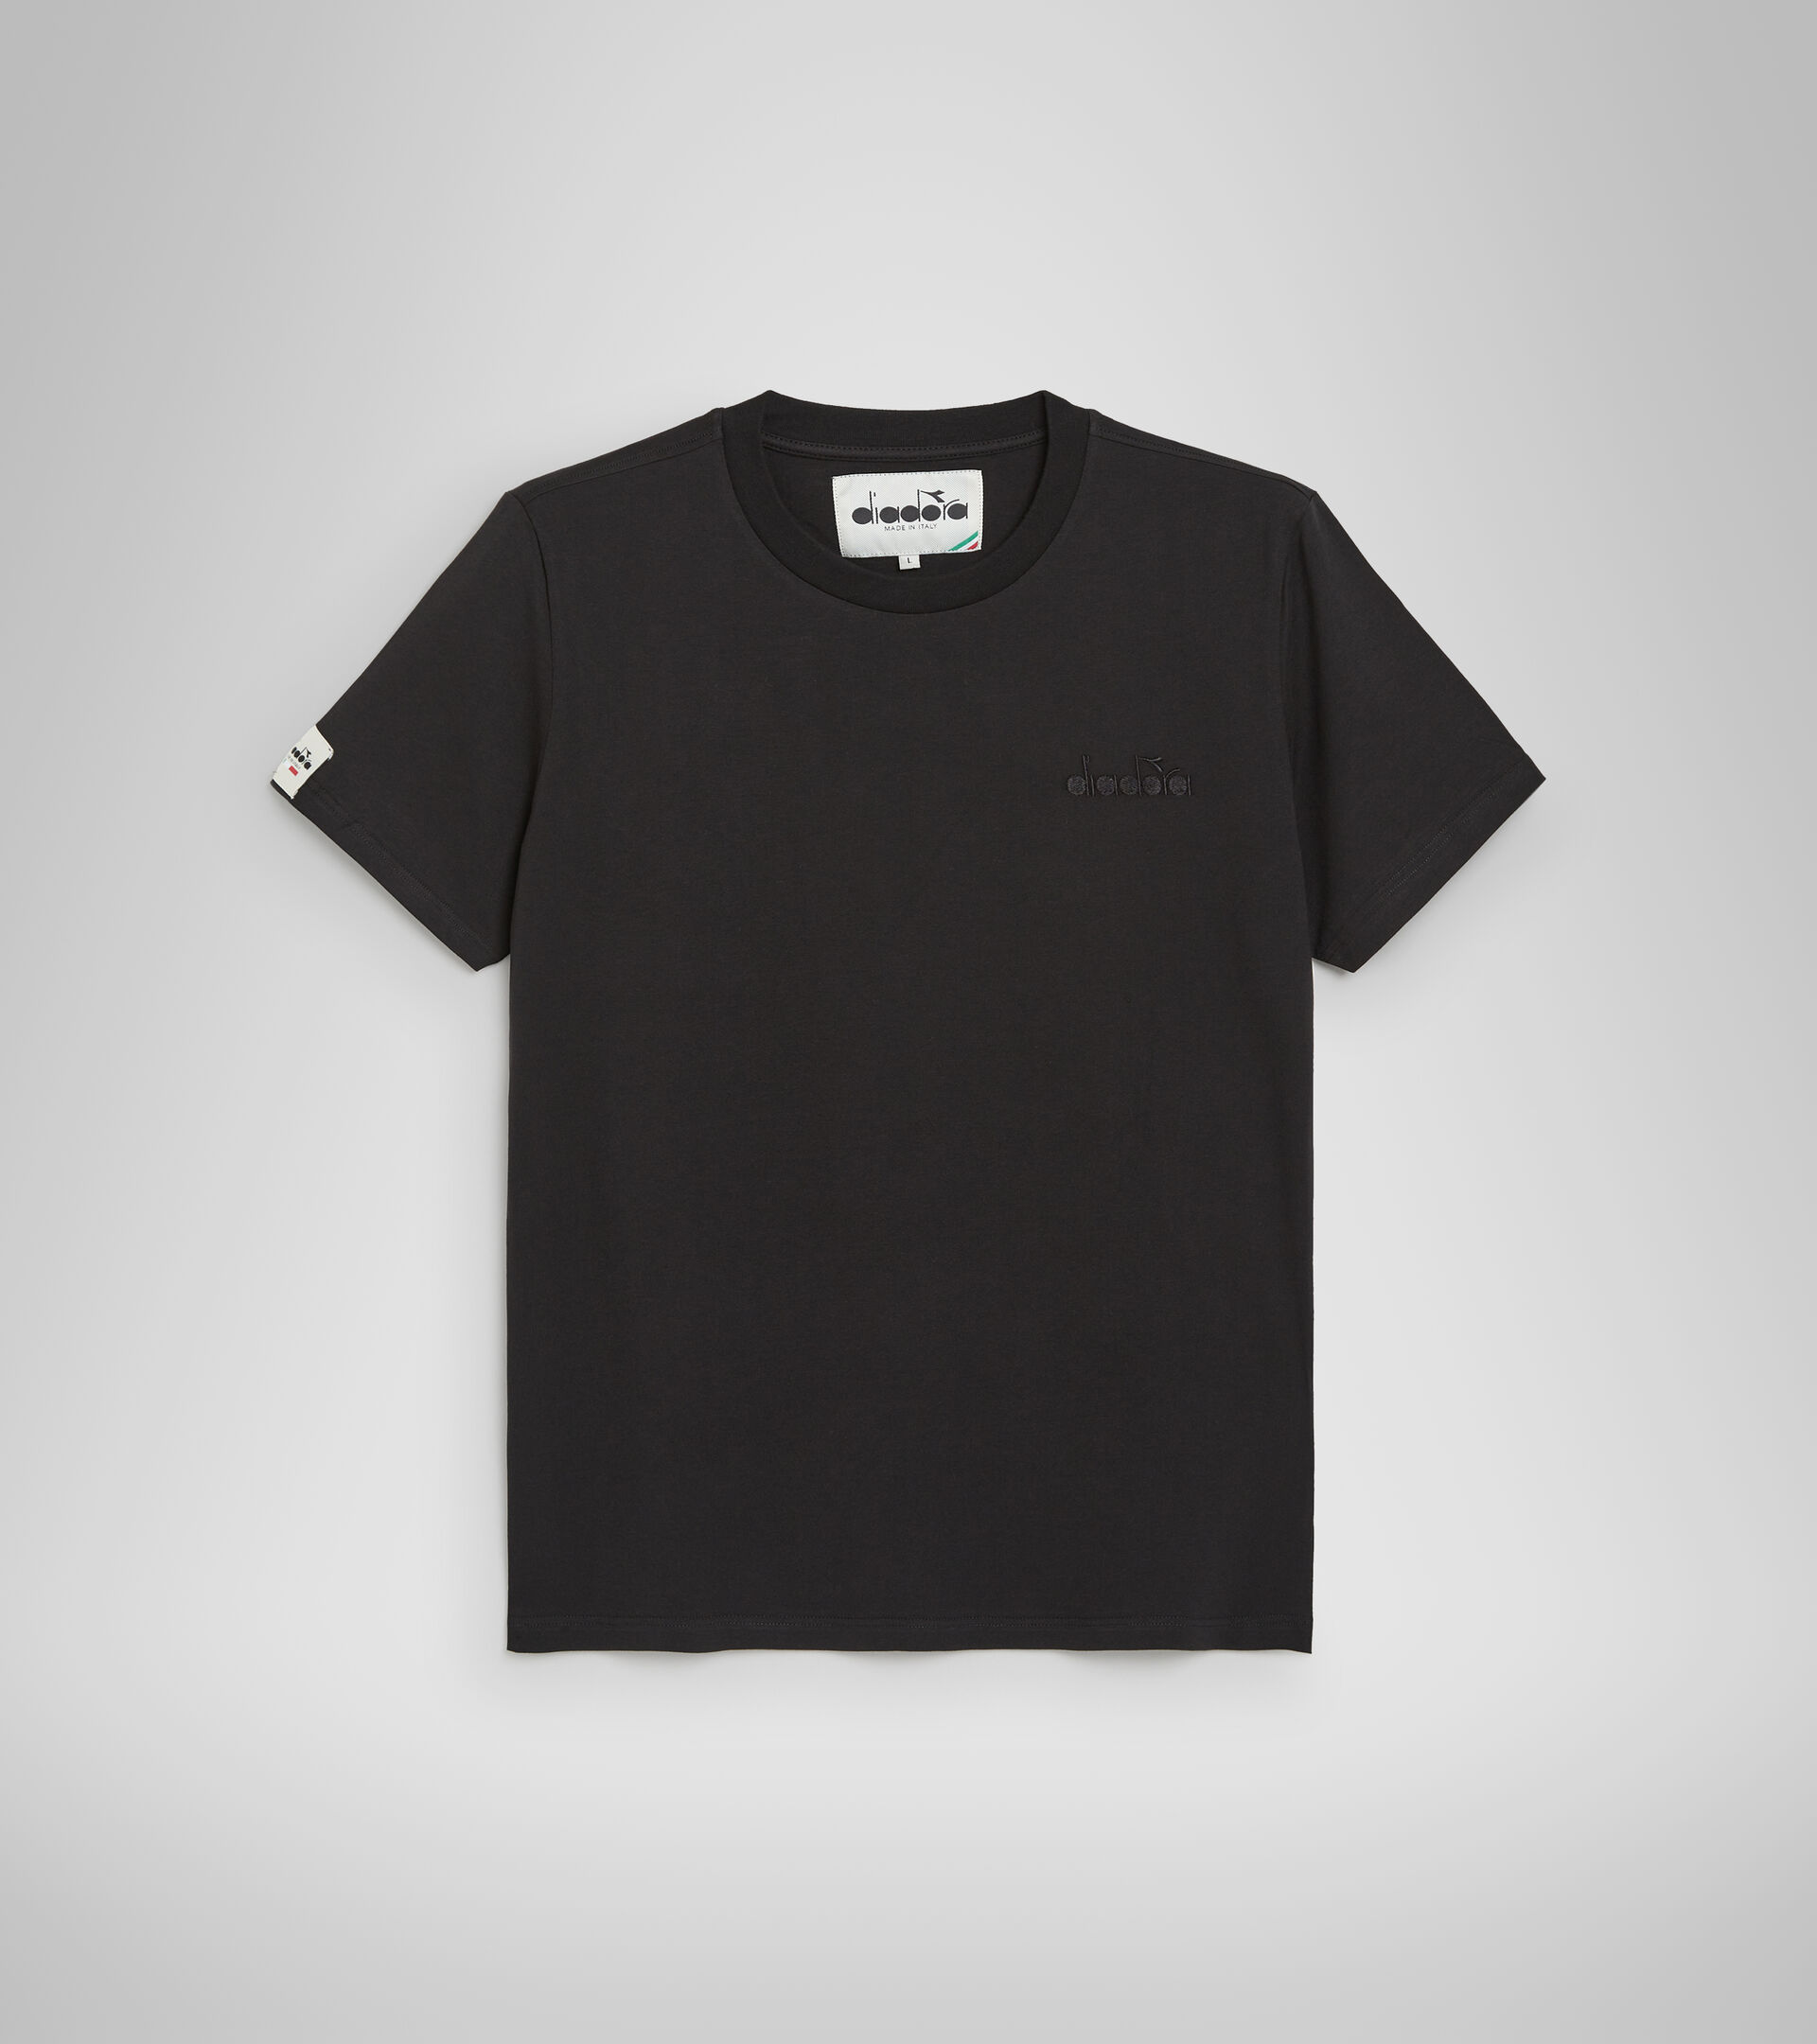 Cotton T-shirt - Made in Italy - Men T-SHIRT SS MII BLACK - Diadora